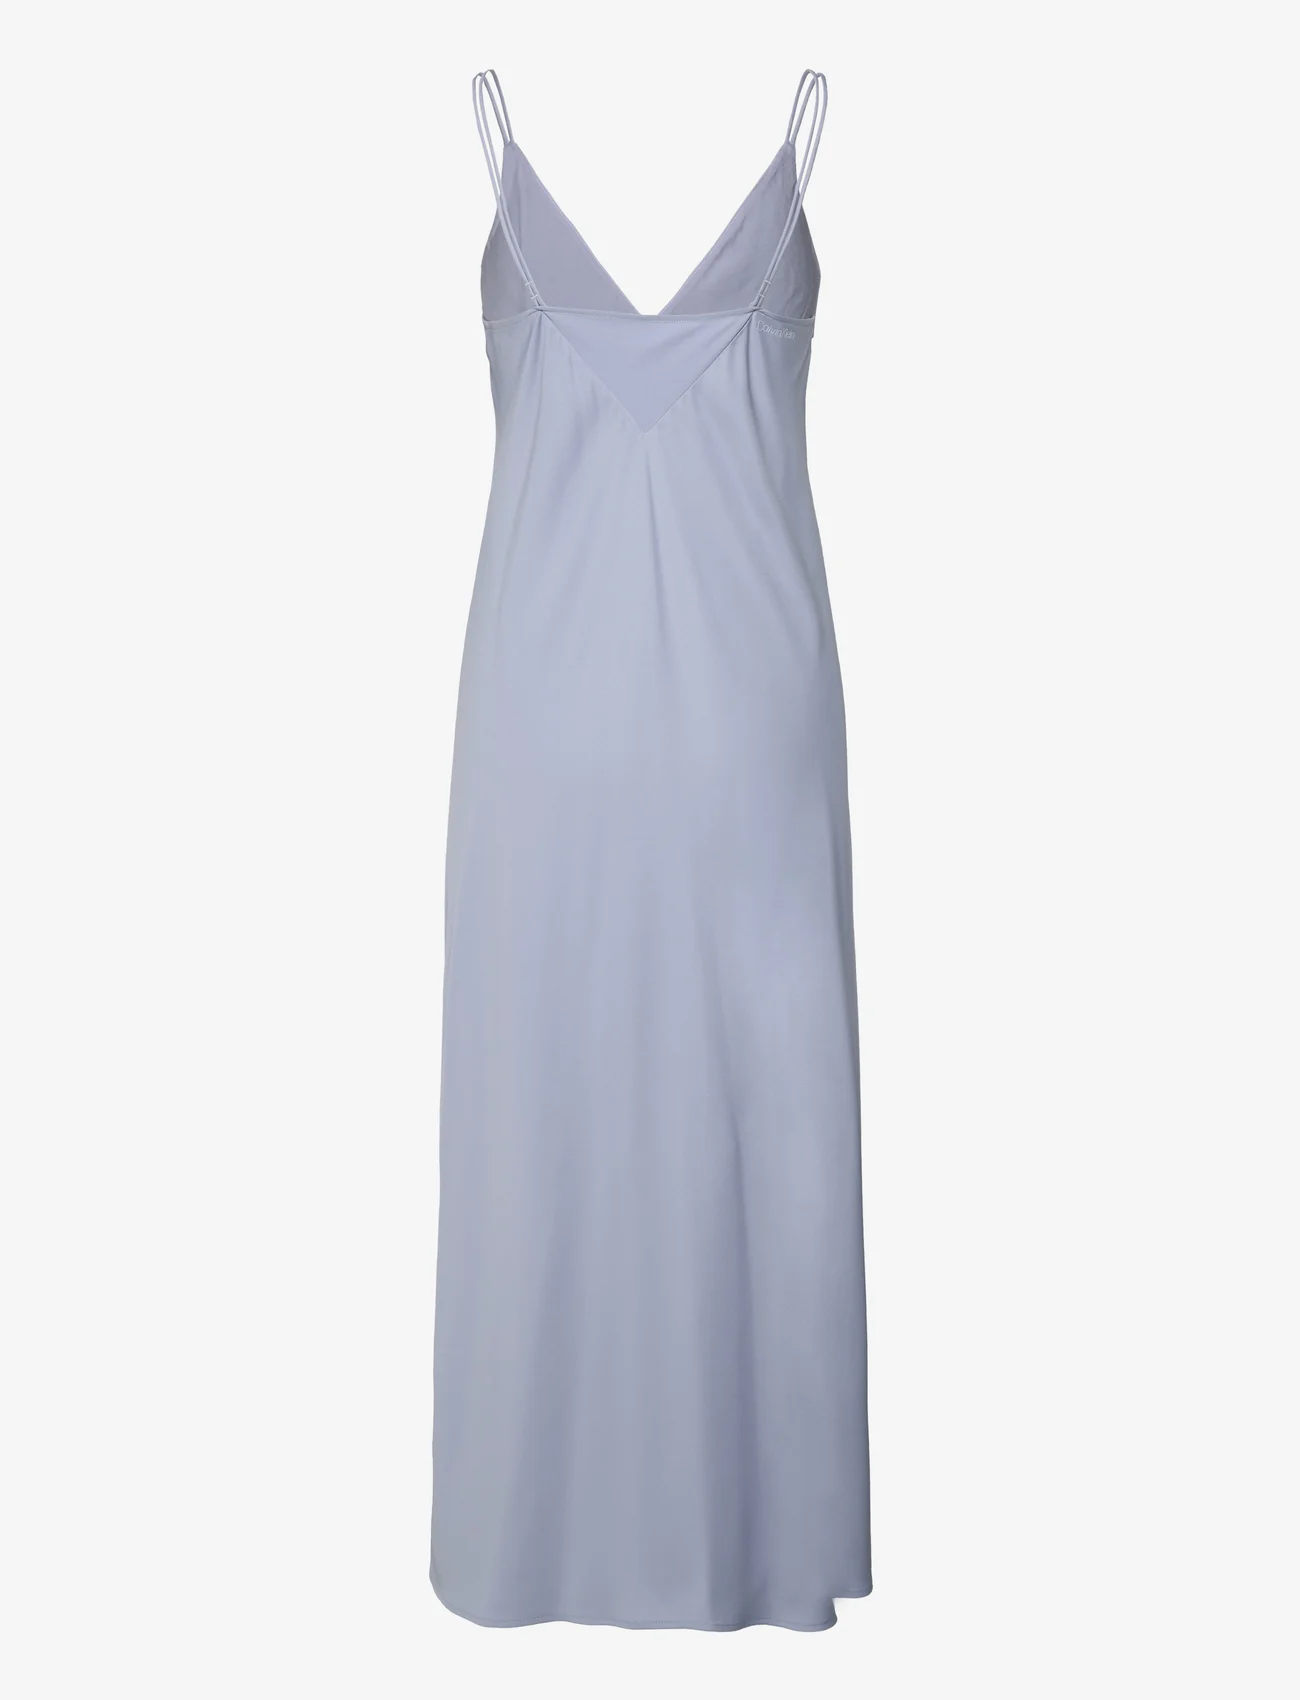 Calvin Klein - RECYCLED CDC MIDI SLIP DRESS - maxi dresses - blue chime - 1